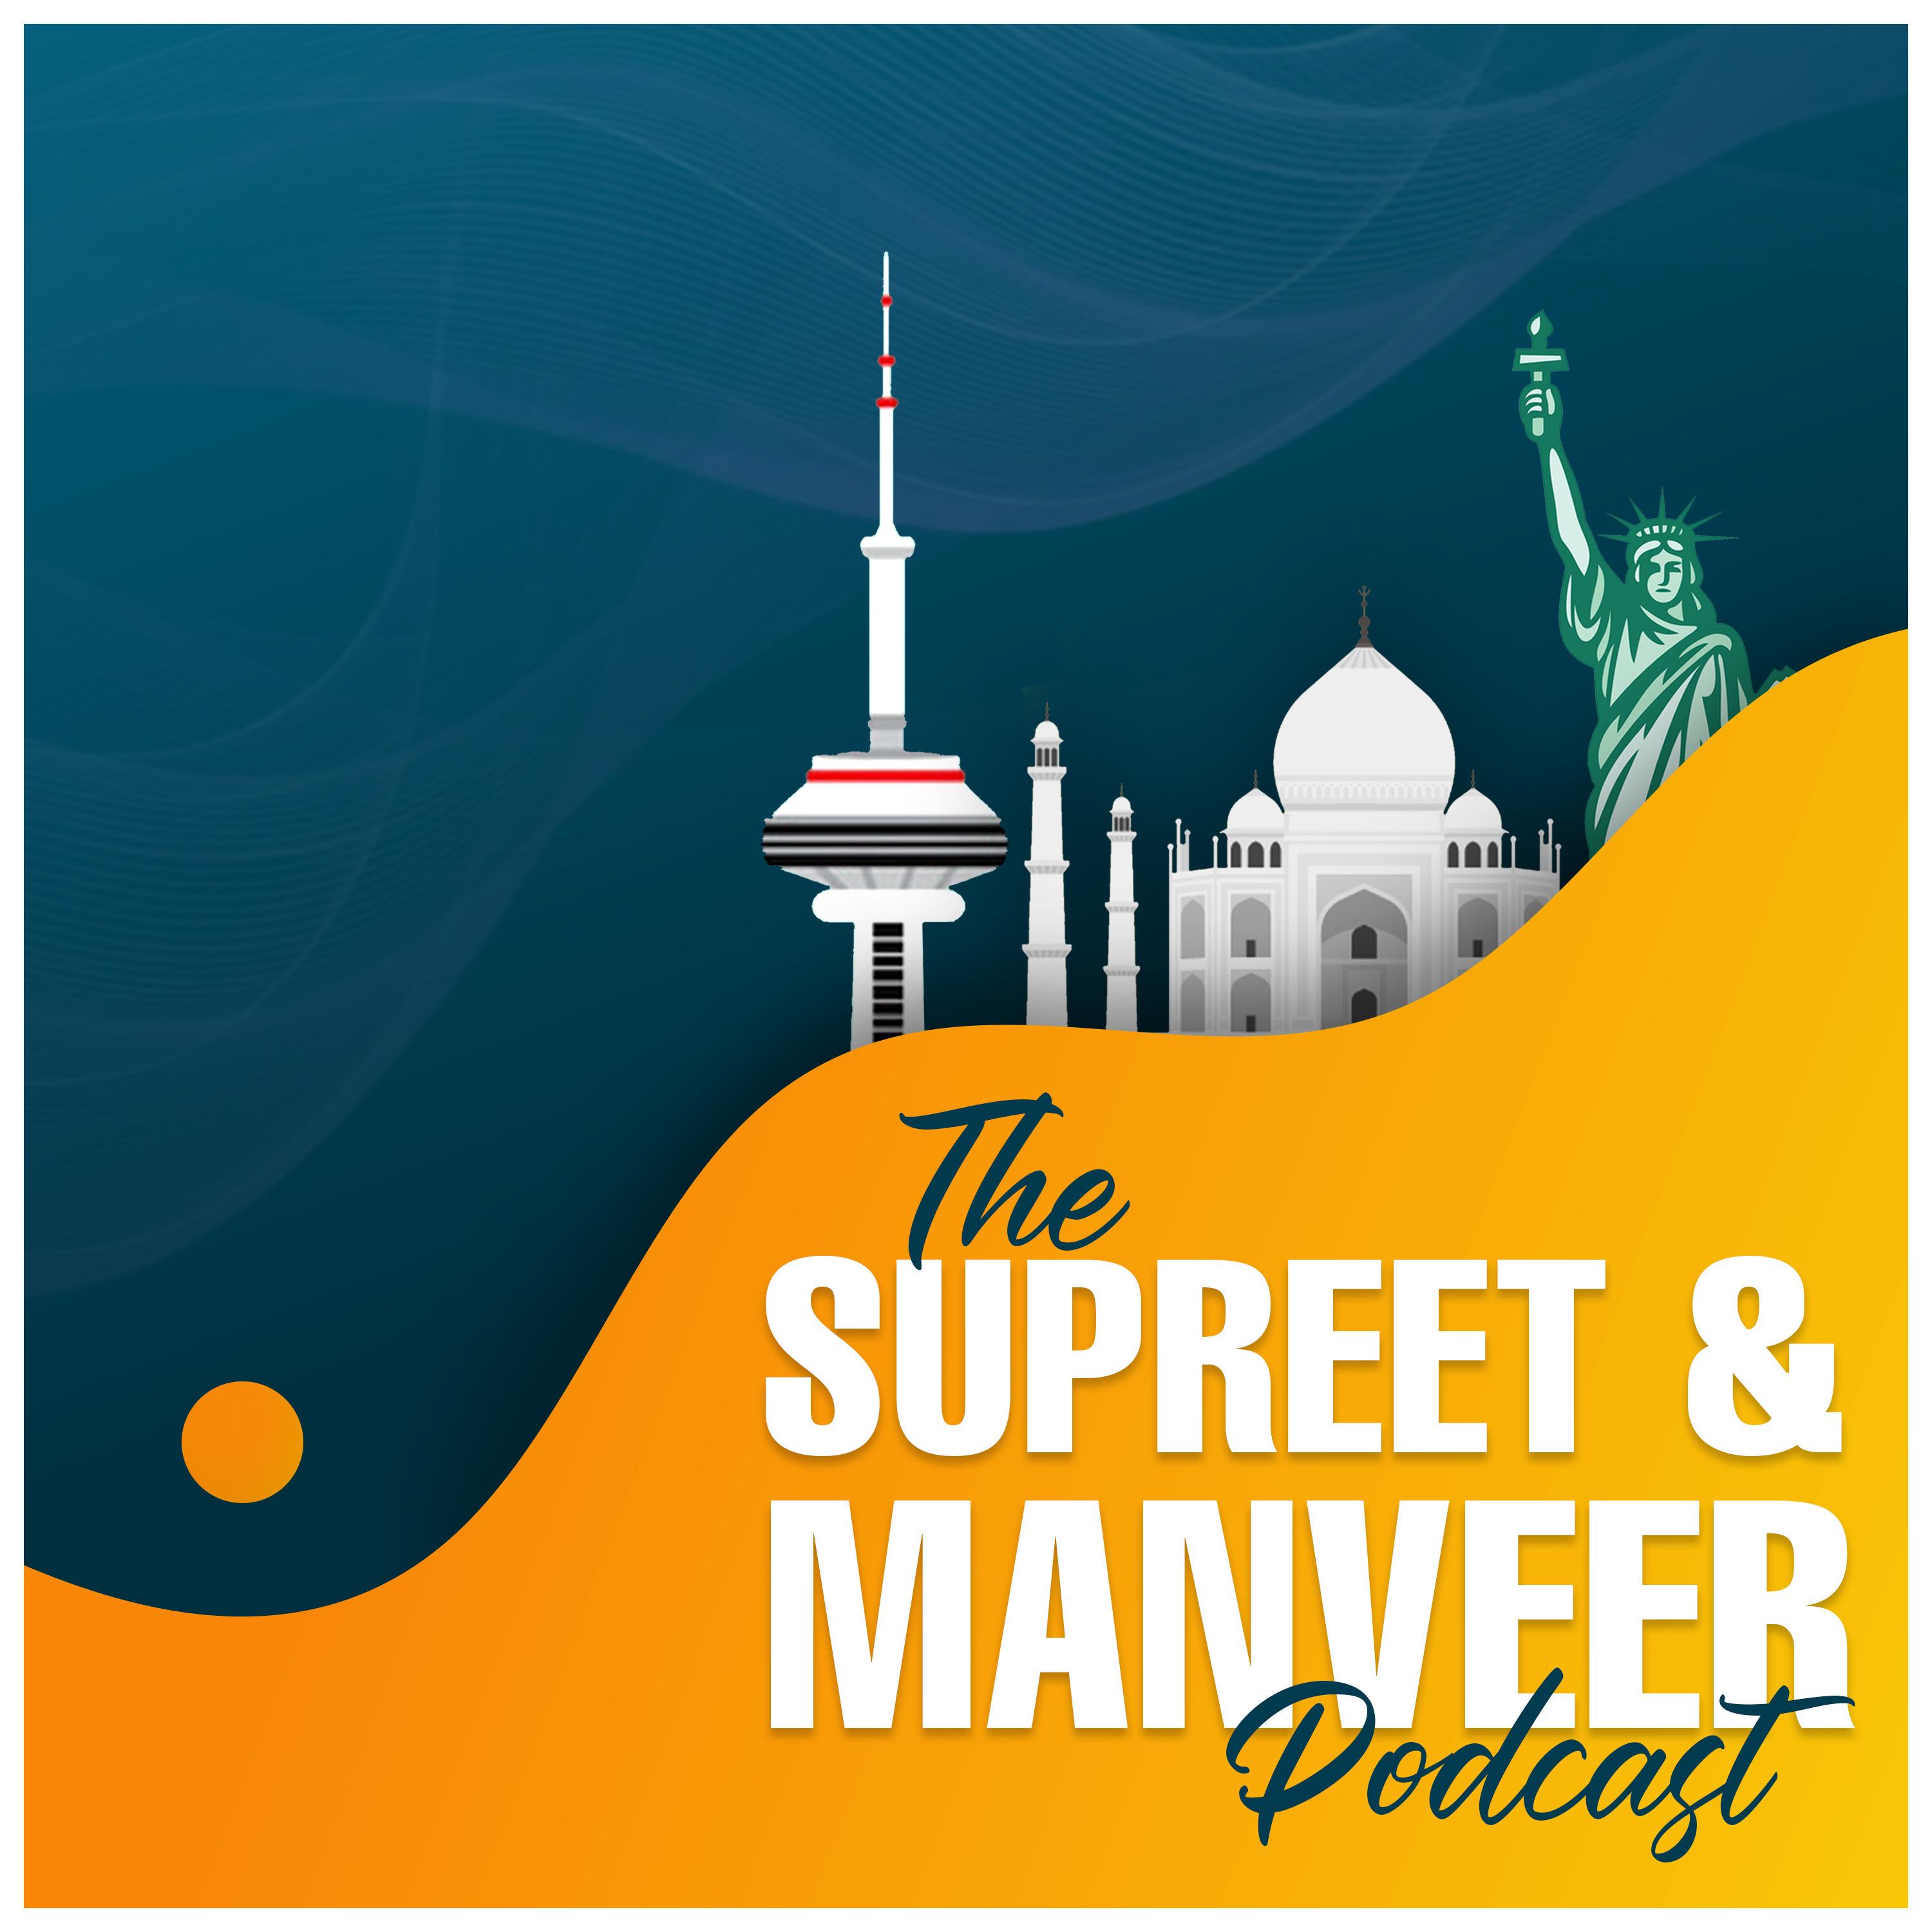 The Supreet & Manveer Podcast